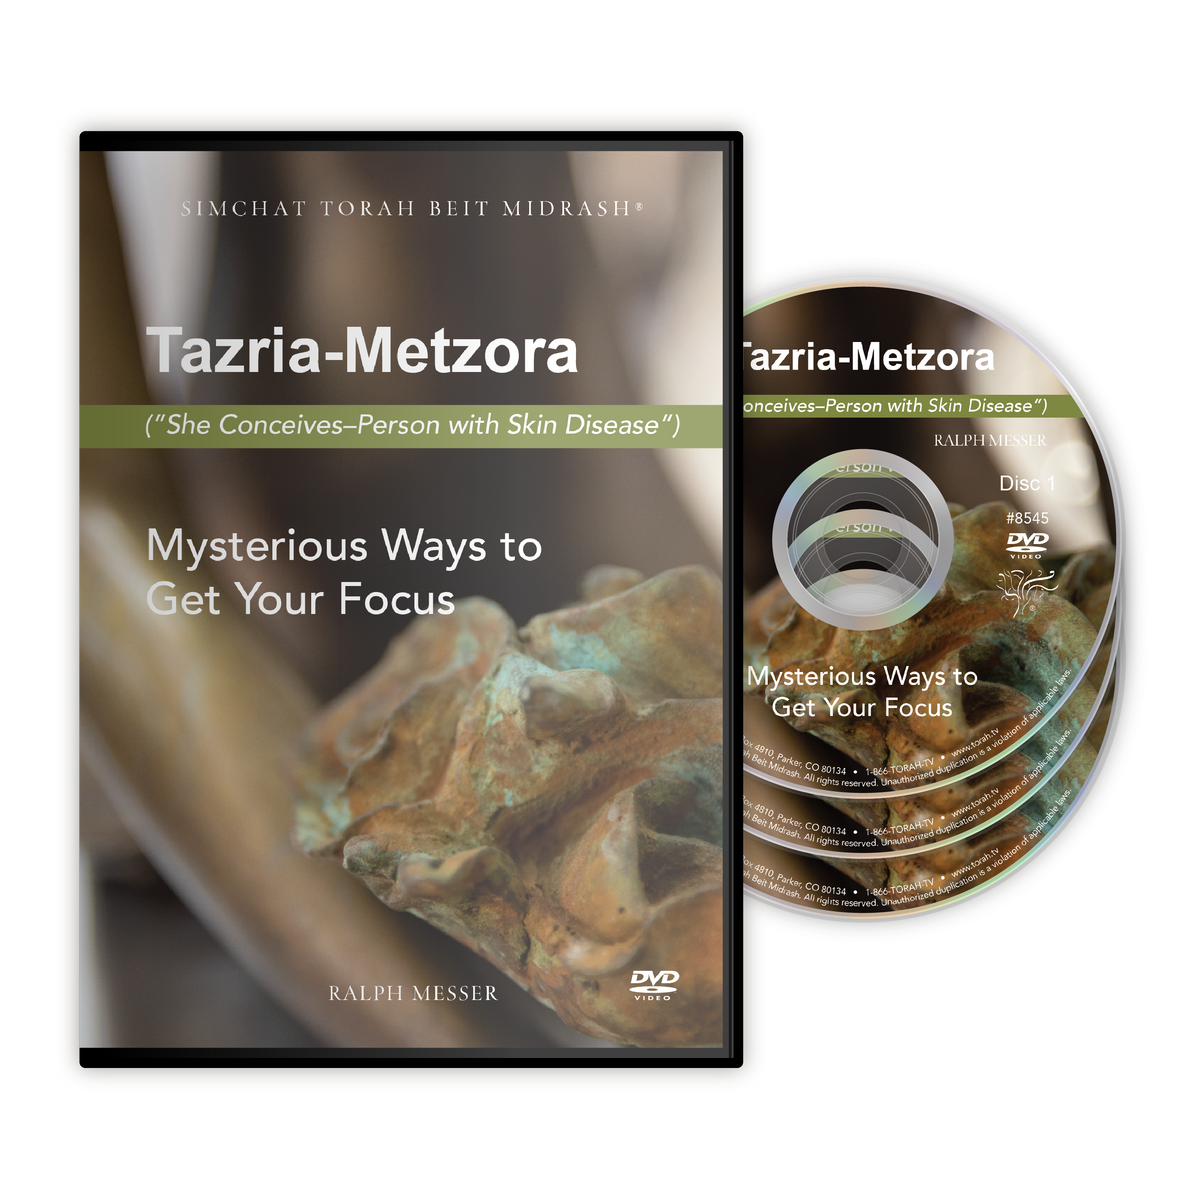 Tazria-Metzora: Mysterious Ways to Get Your Focus